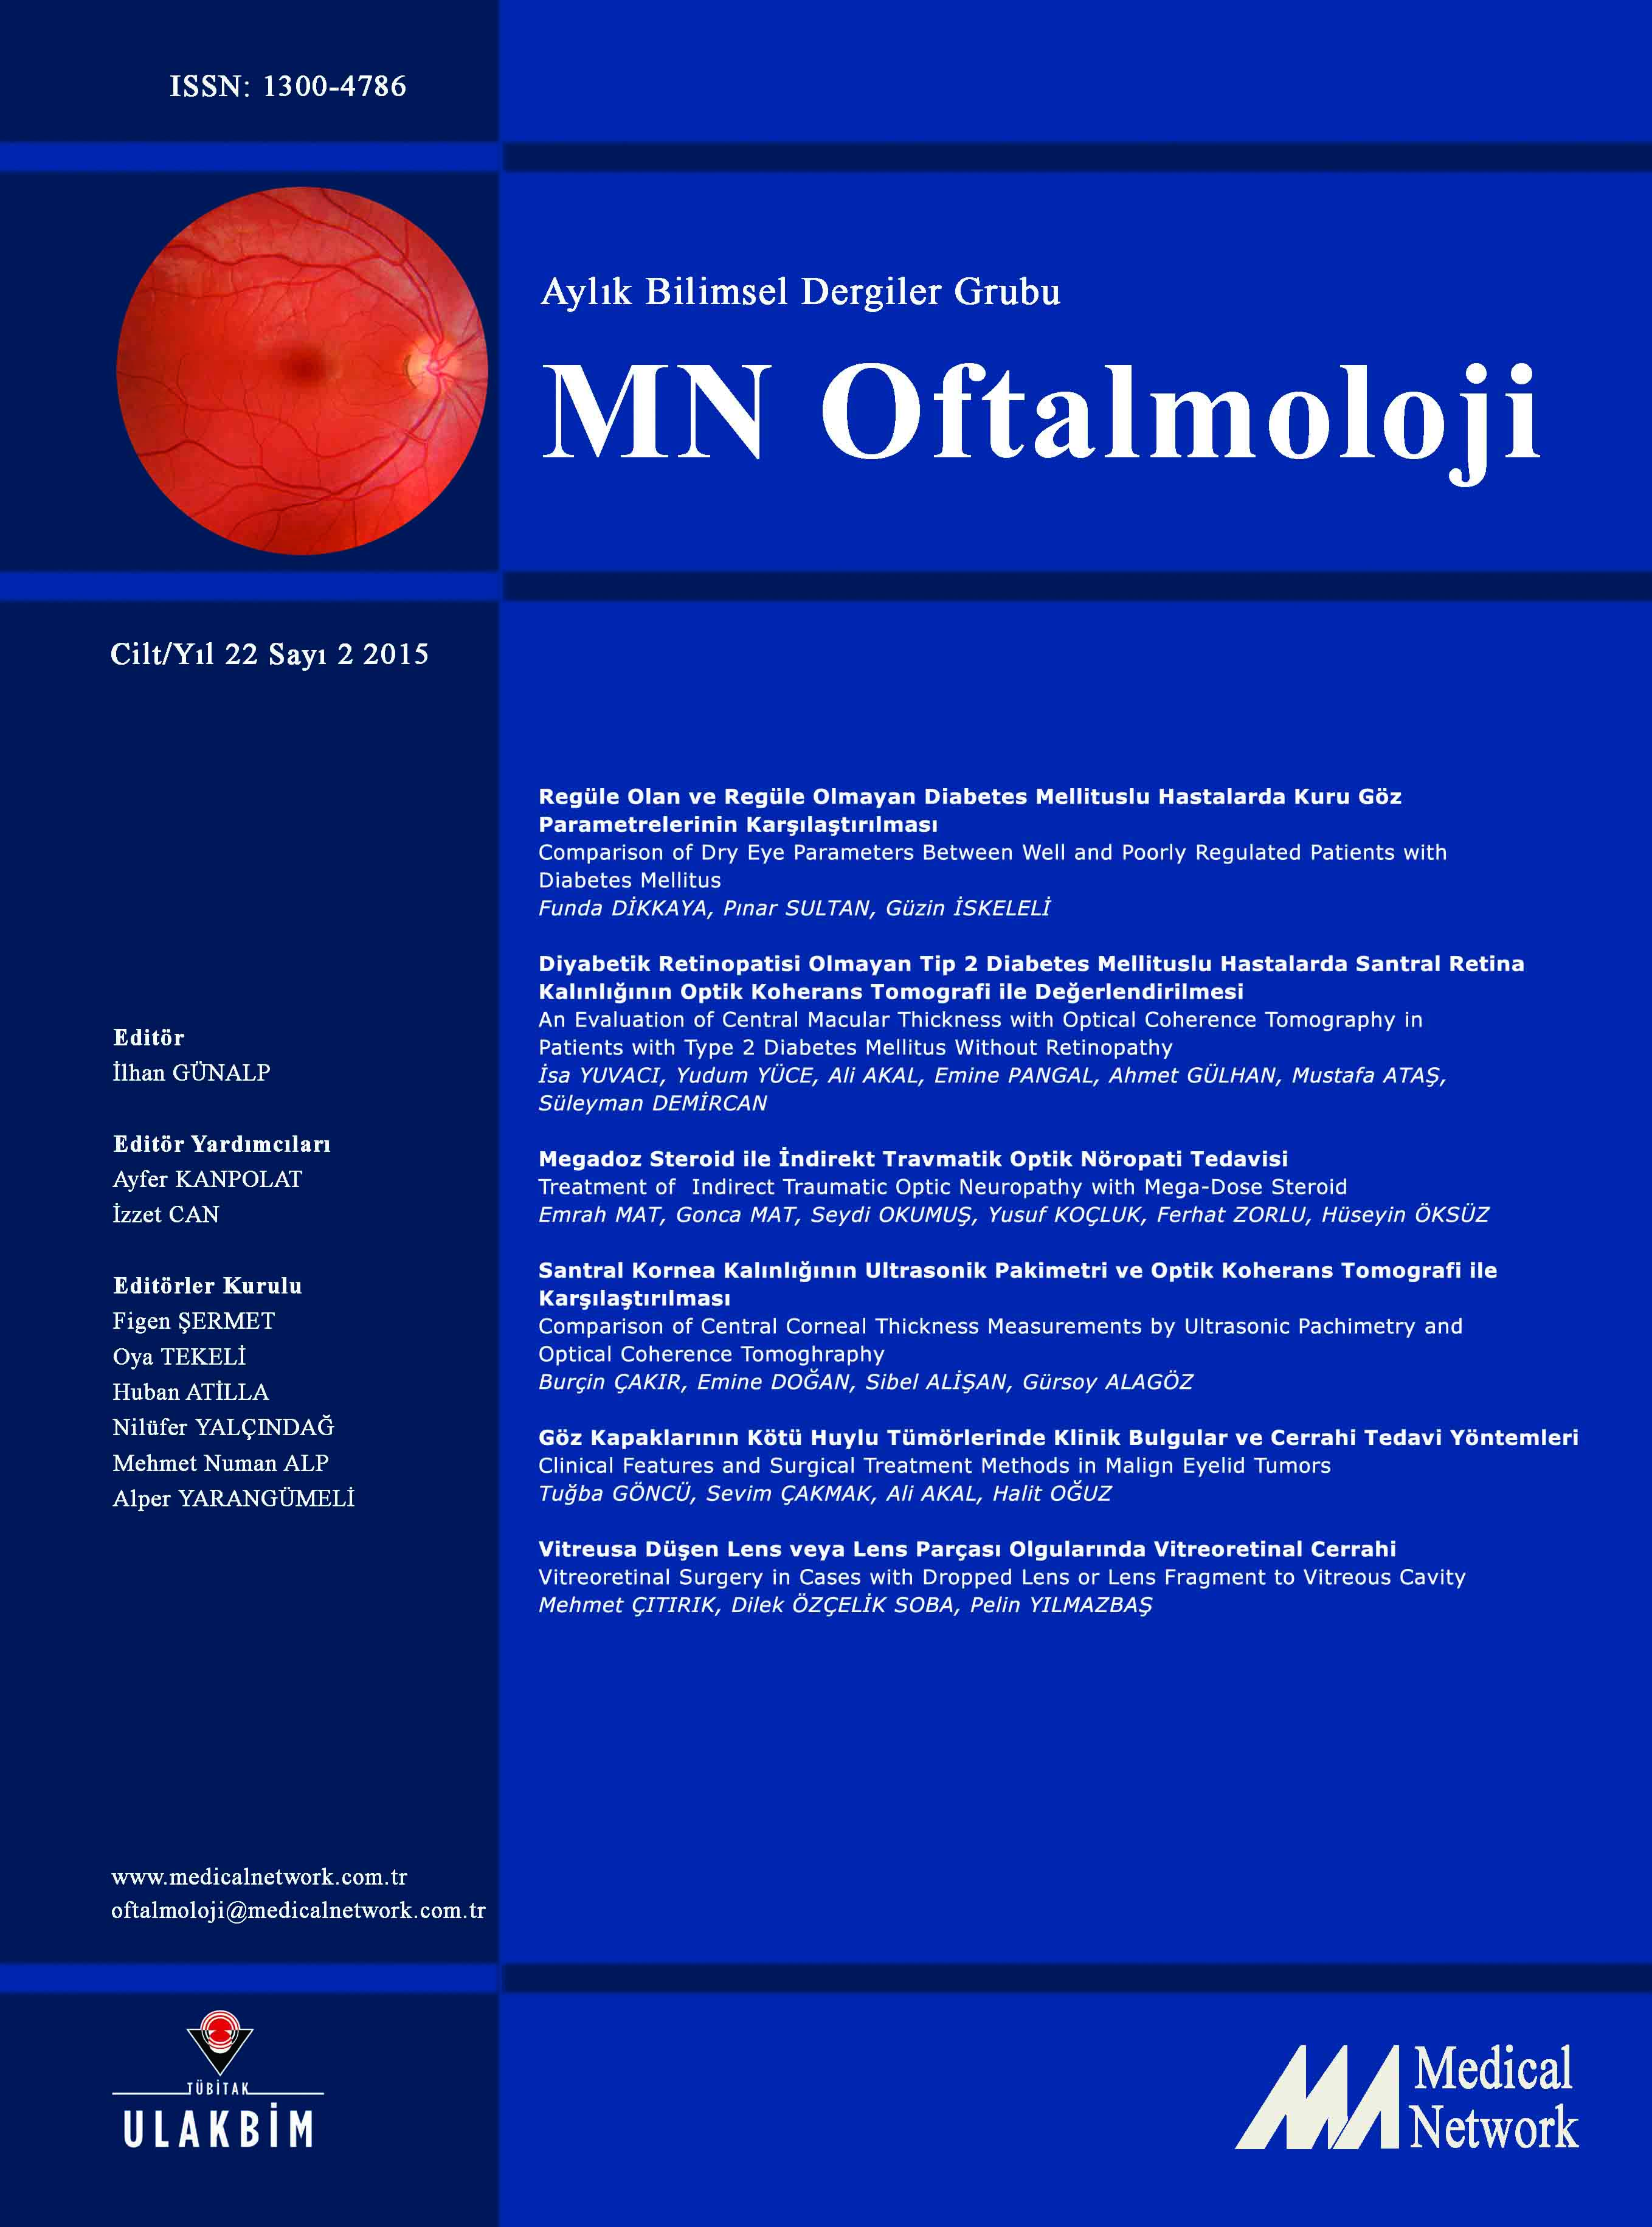 <p>MN Oftalmoloji Cilt: 22 Say: 2 2015 (MN Ophthalmology Volume: 22 No 2 2015)</p>